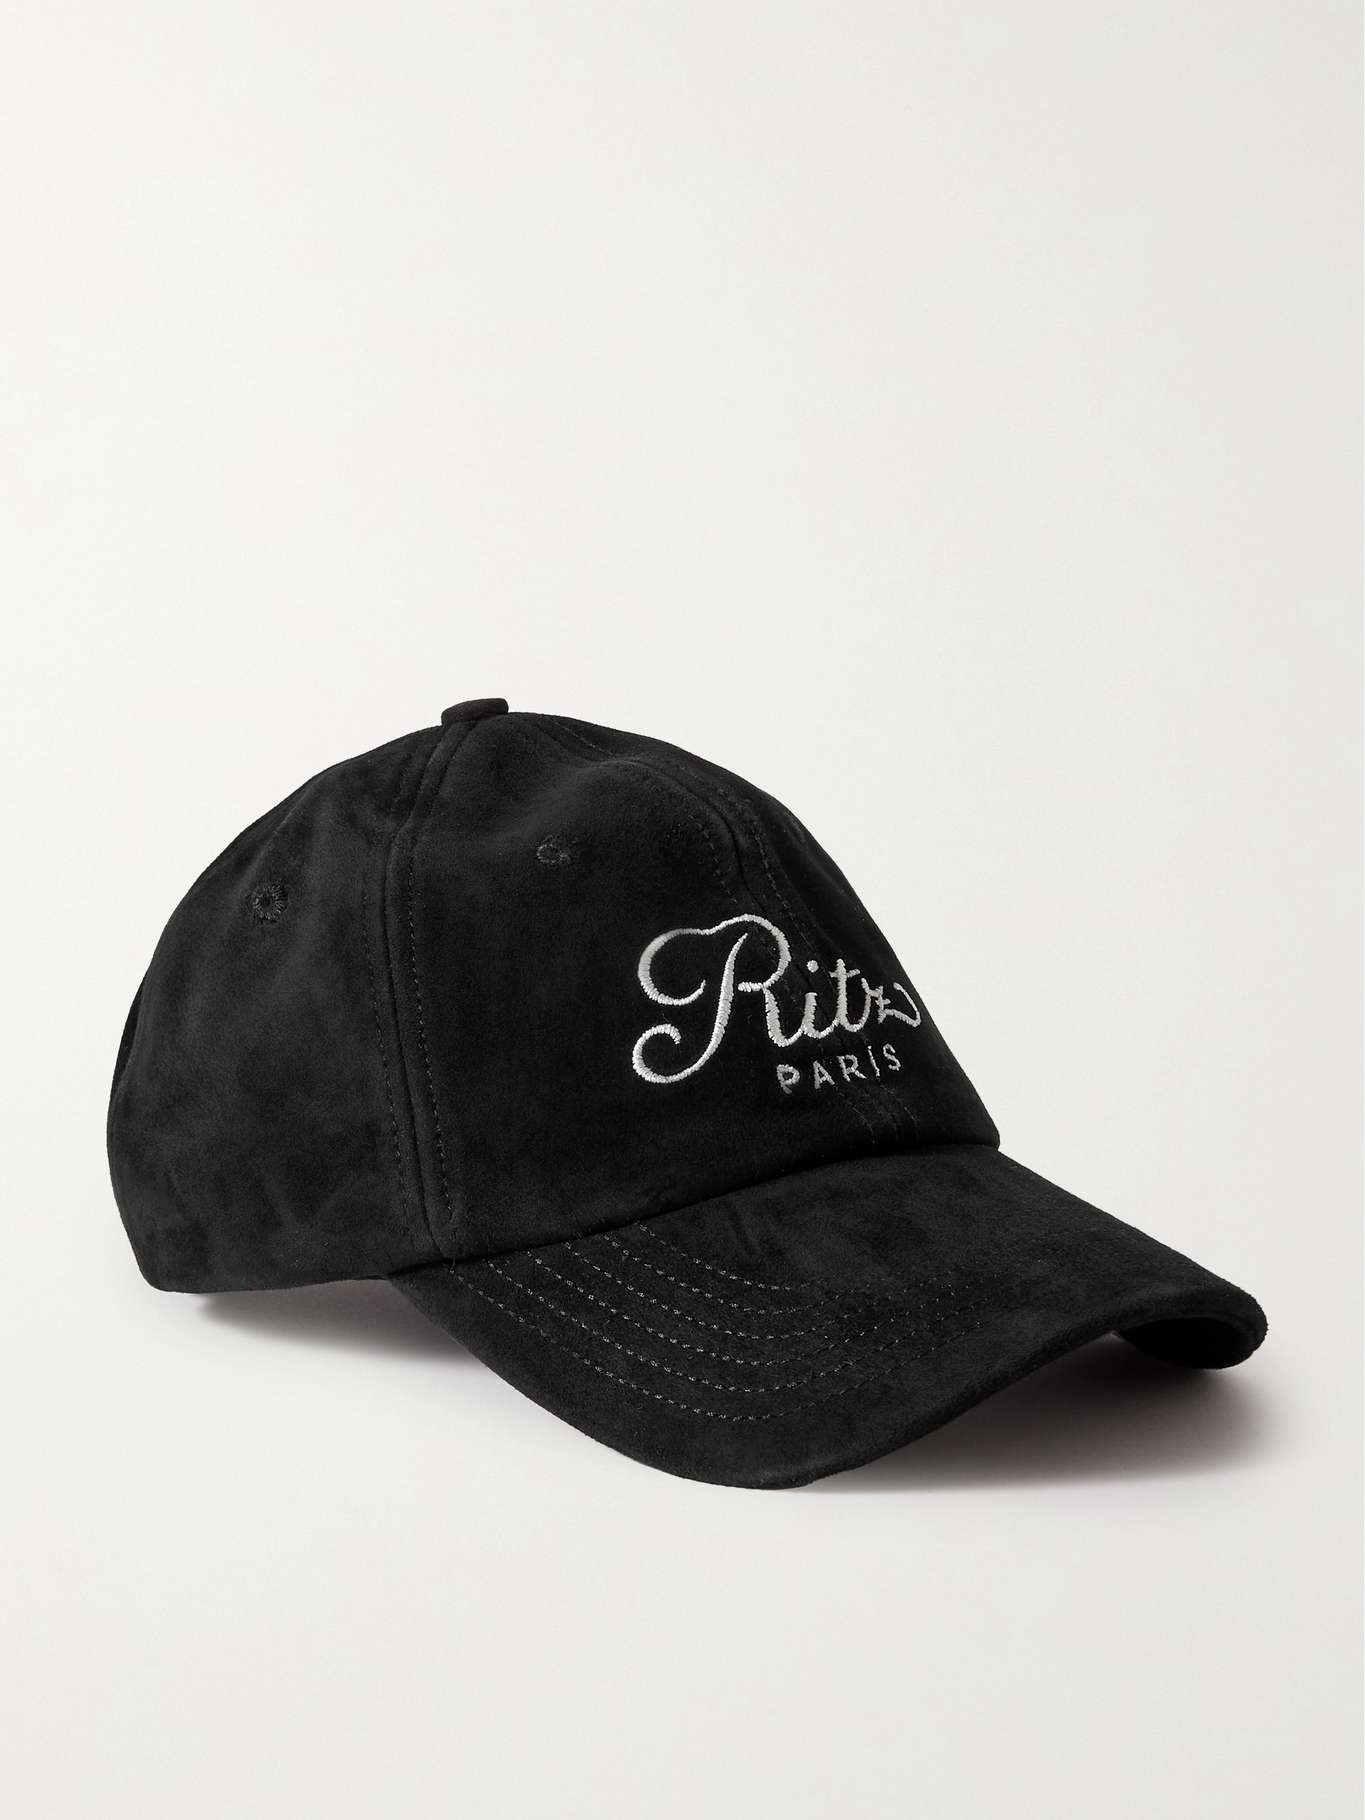 + Ritz Paris embroidered suede baseball cap - 1